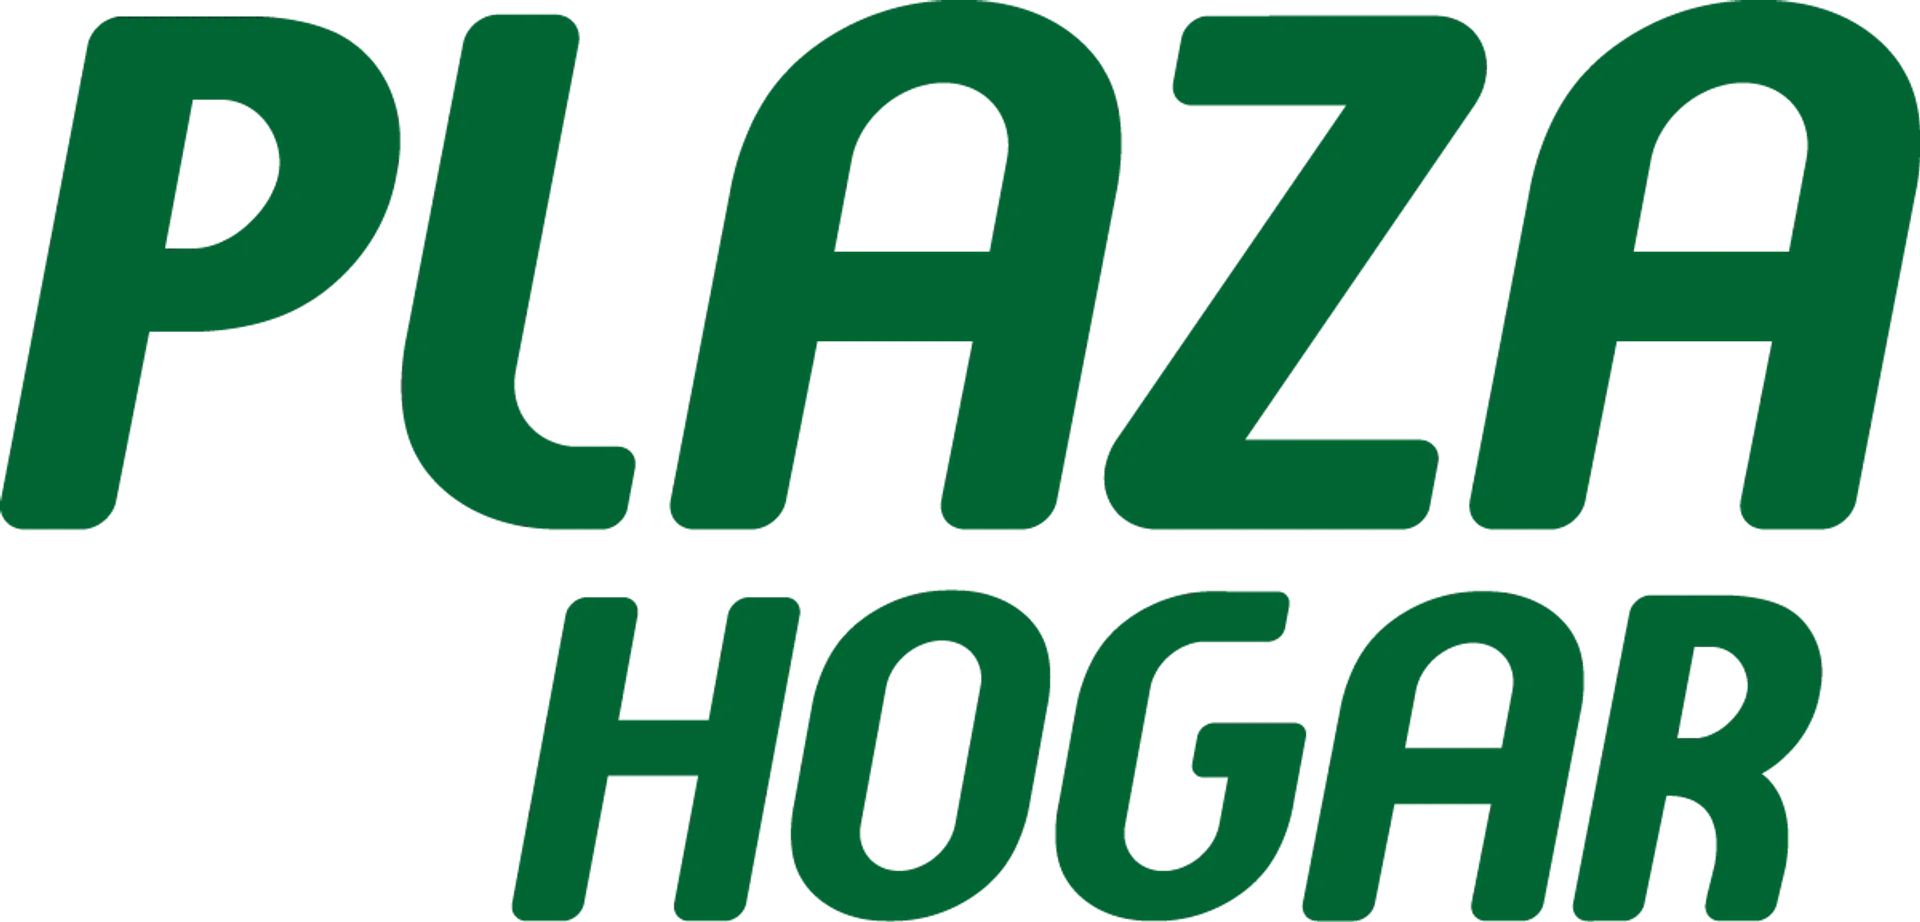 PLAZA HOGAR logo